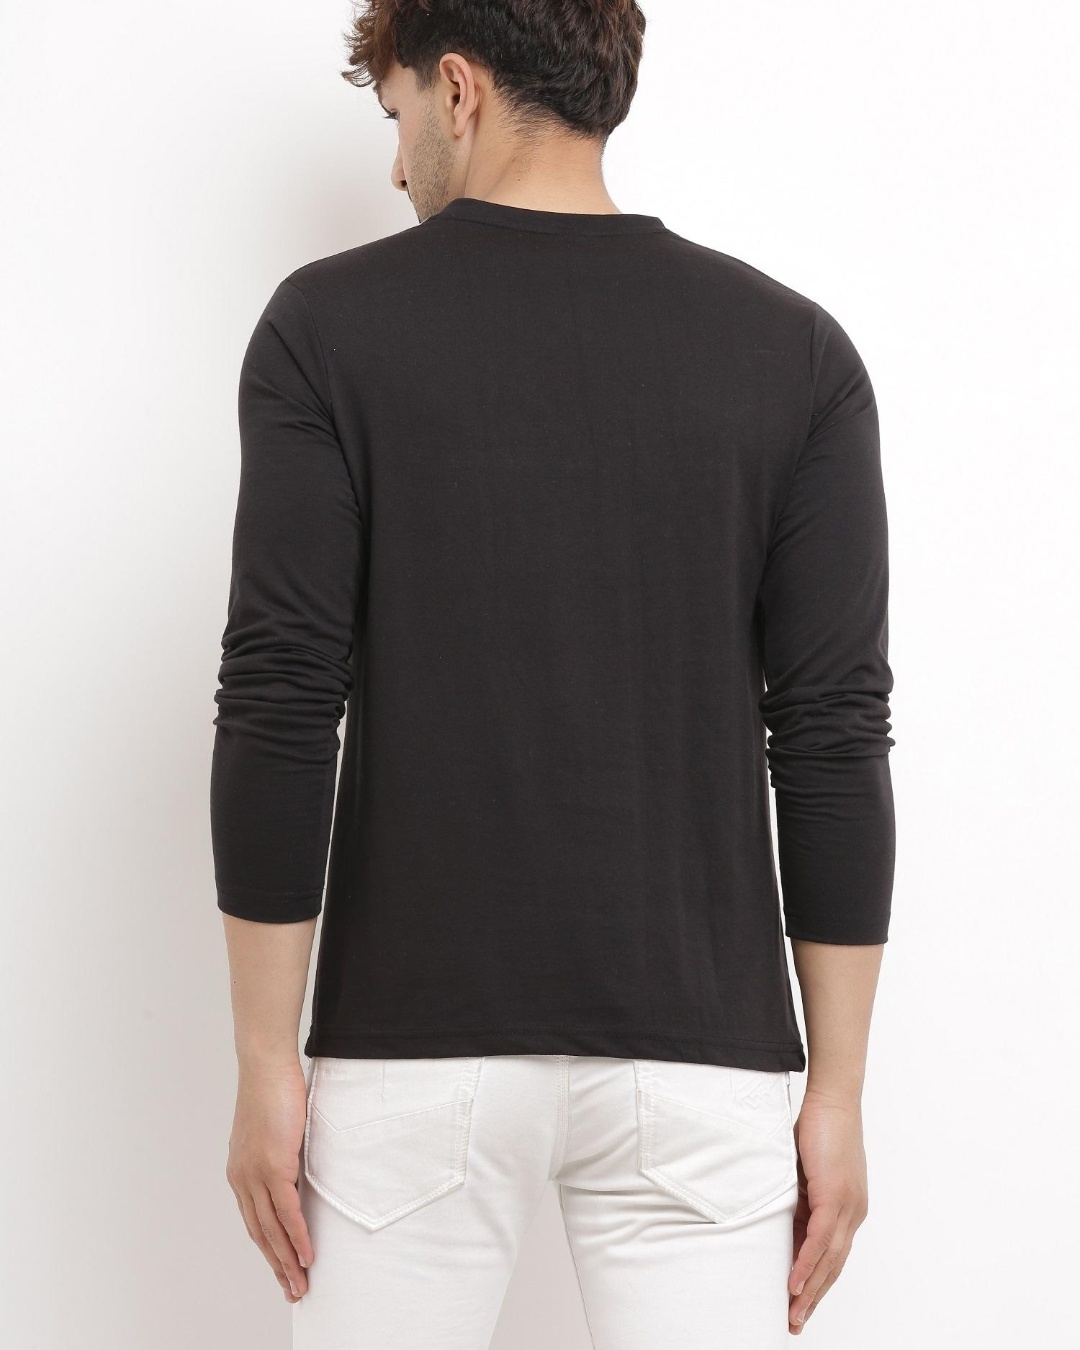 Shop Men's Black & White Color Block Slim Fit T-shirt-Back